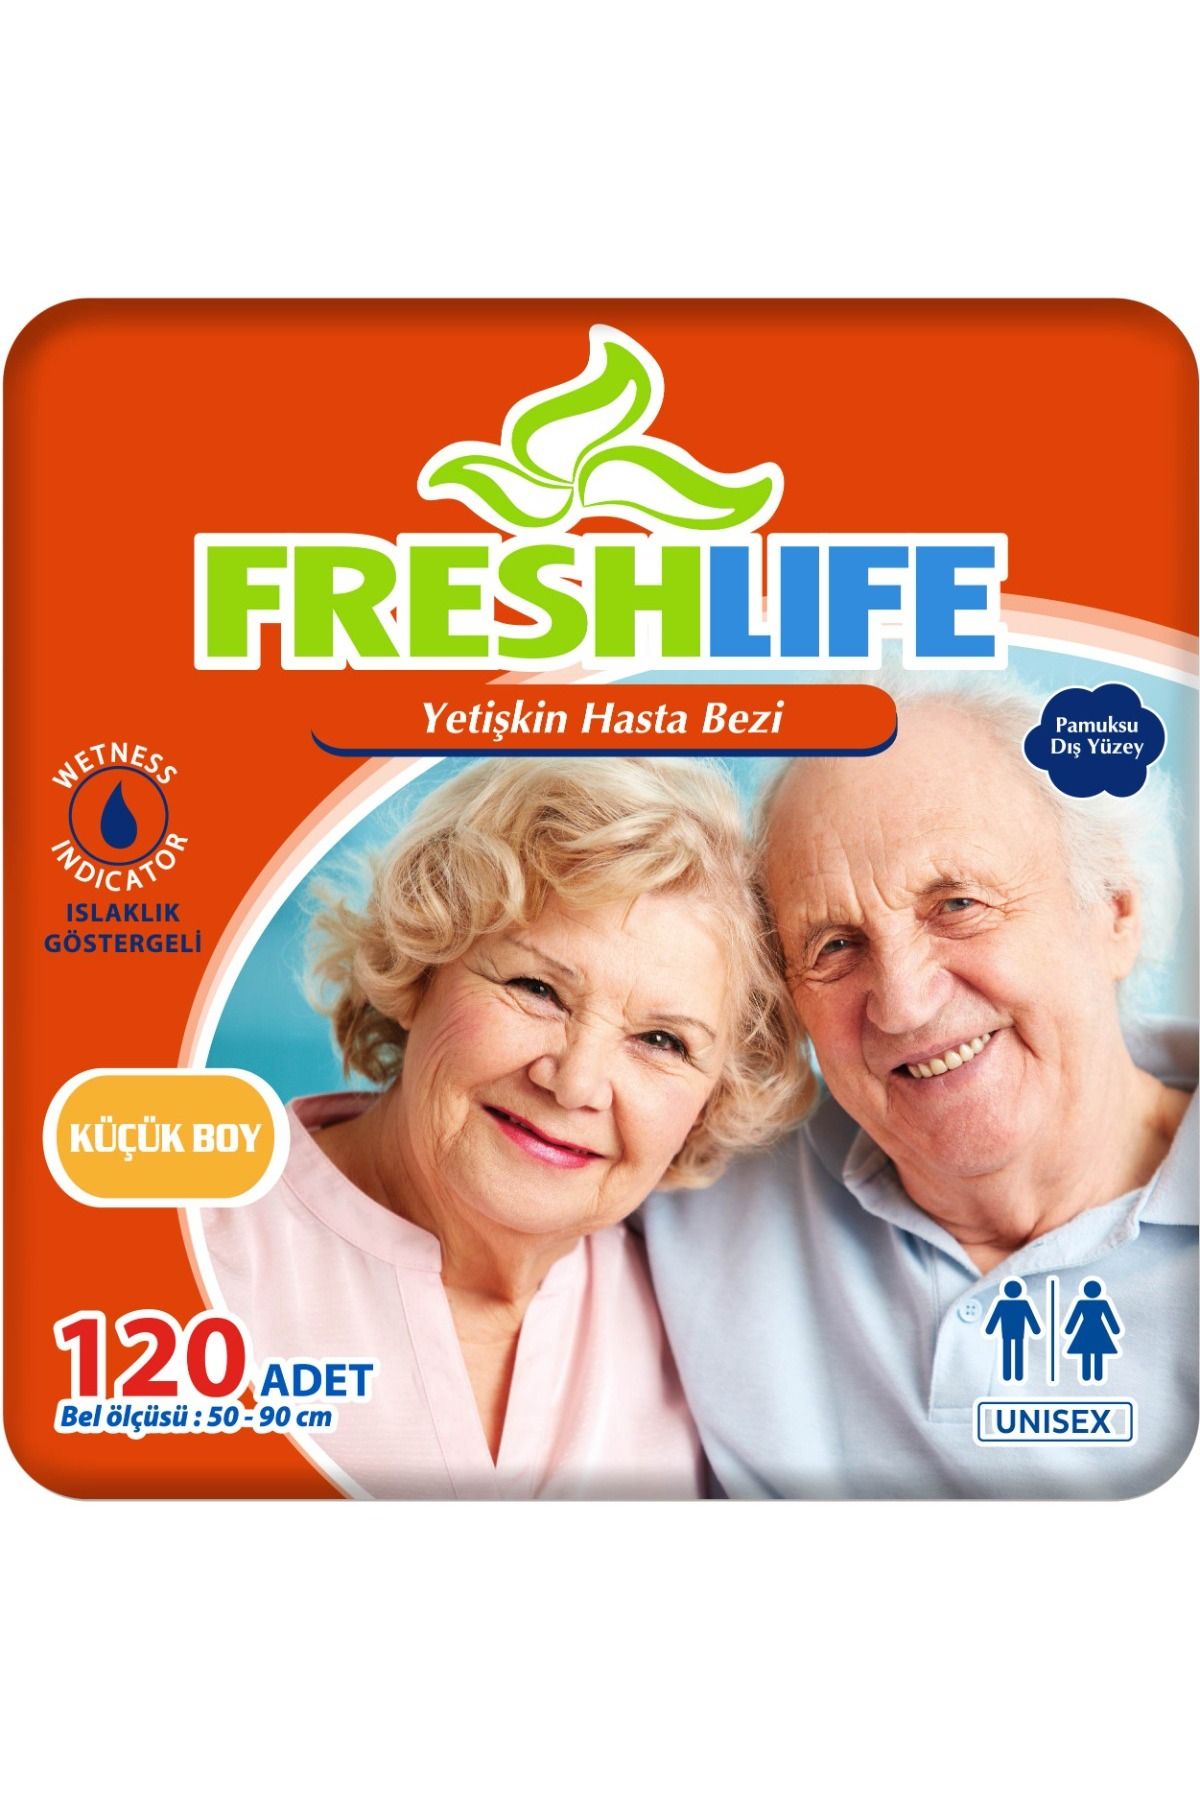 Freshlife 4'lü Small Yetişkin Hasta Bezi 30x4 (120 ADET)